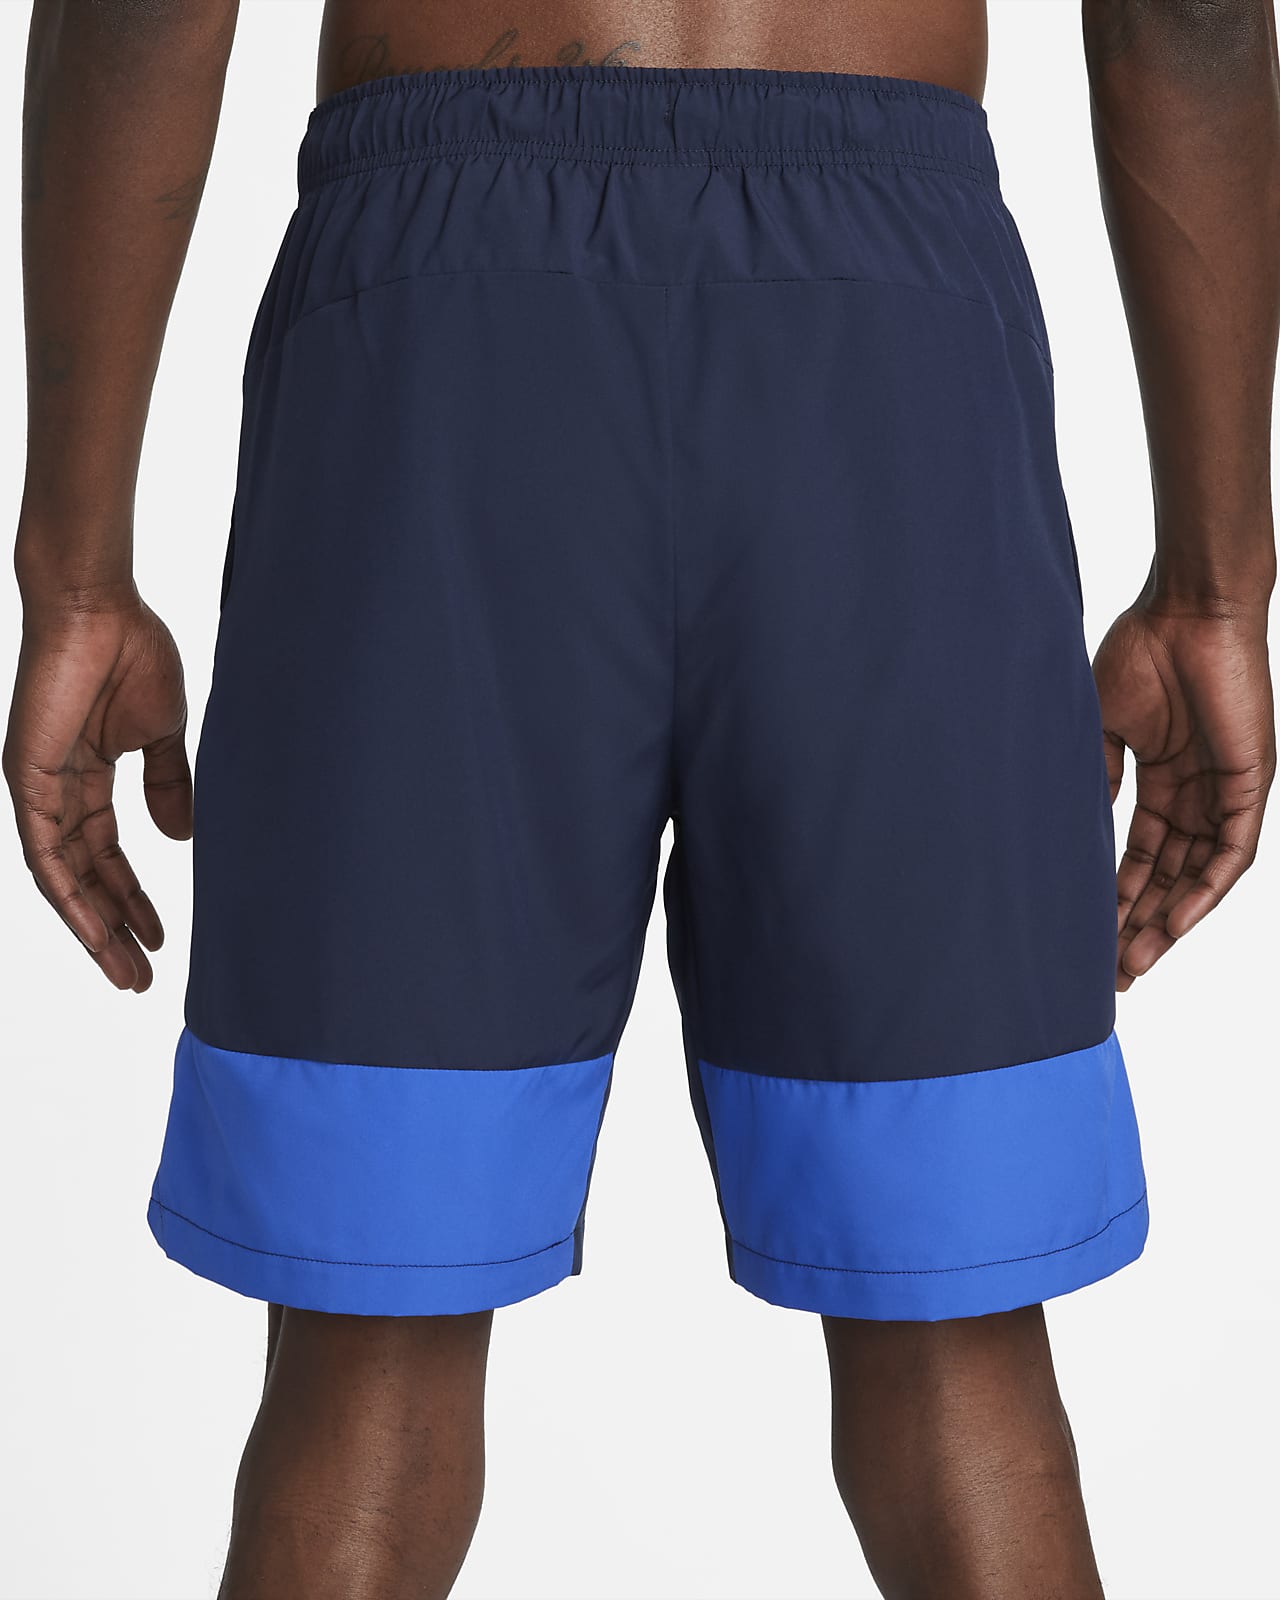 Nike Dri-FIT Epic Men's Knit Training Pants (as1, Alpha, m, Regular,  Regular, Navy, Medium) : Clothing, Shoes & Jewelry 